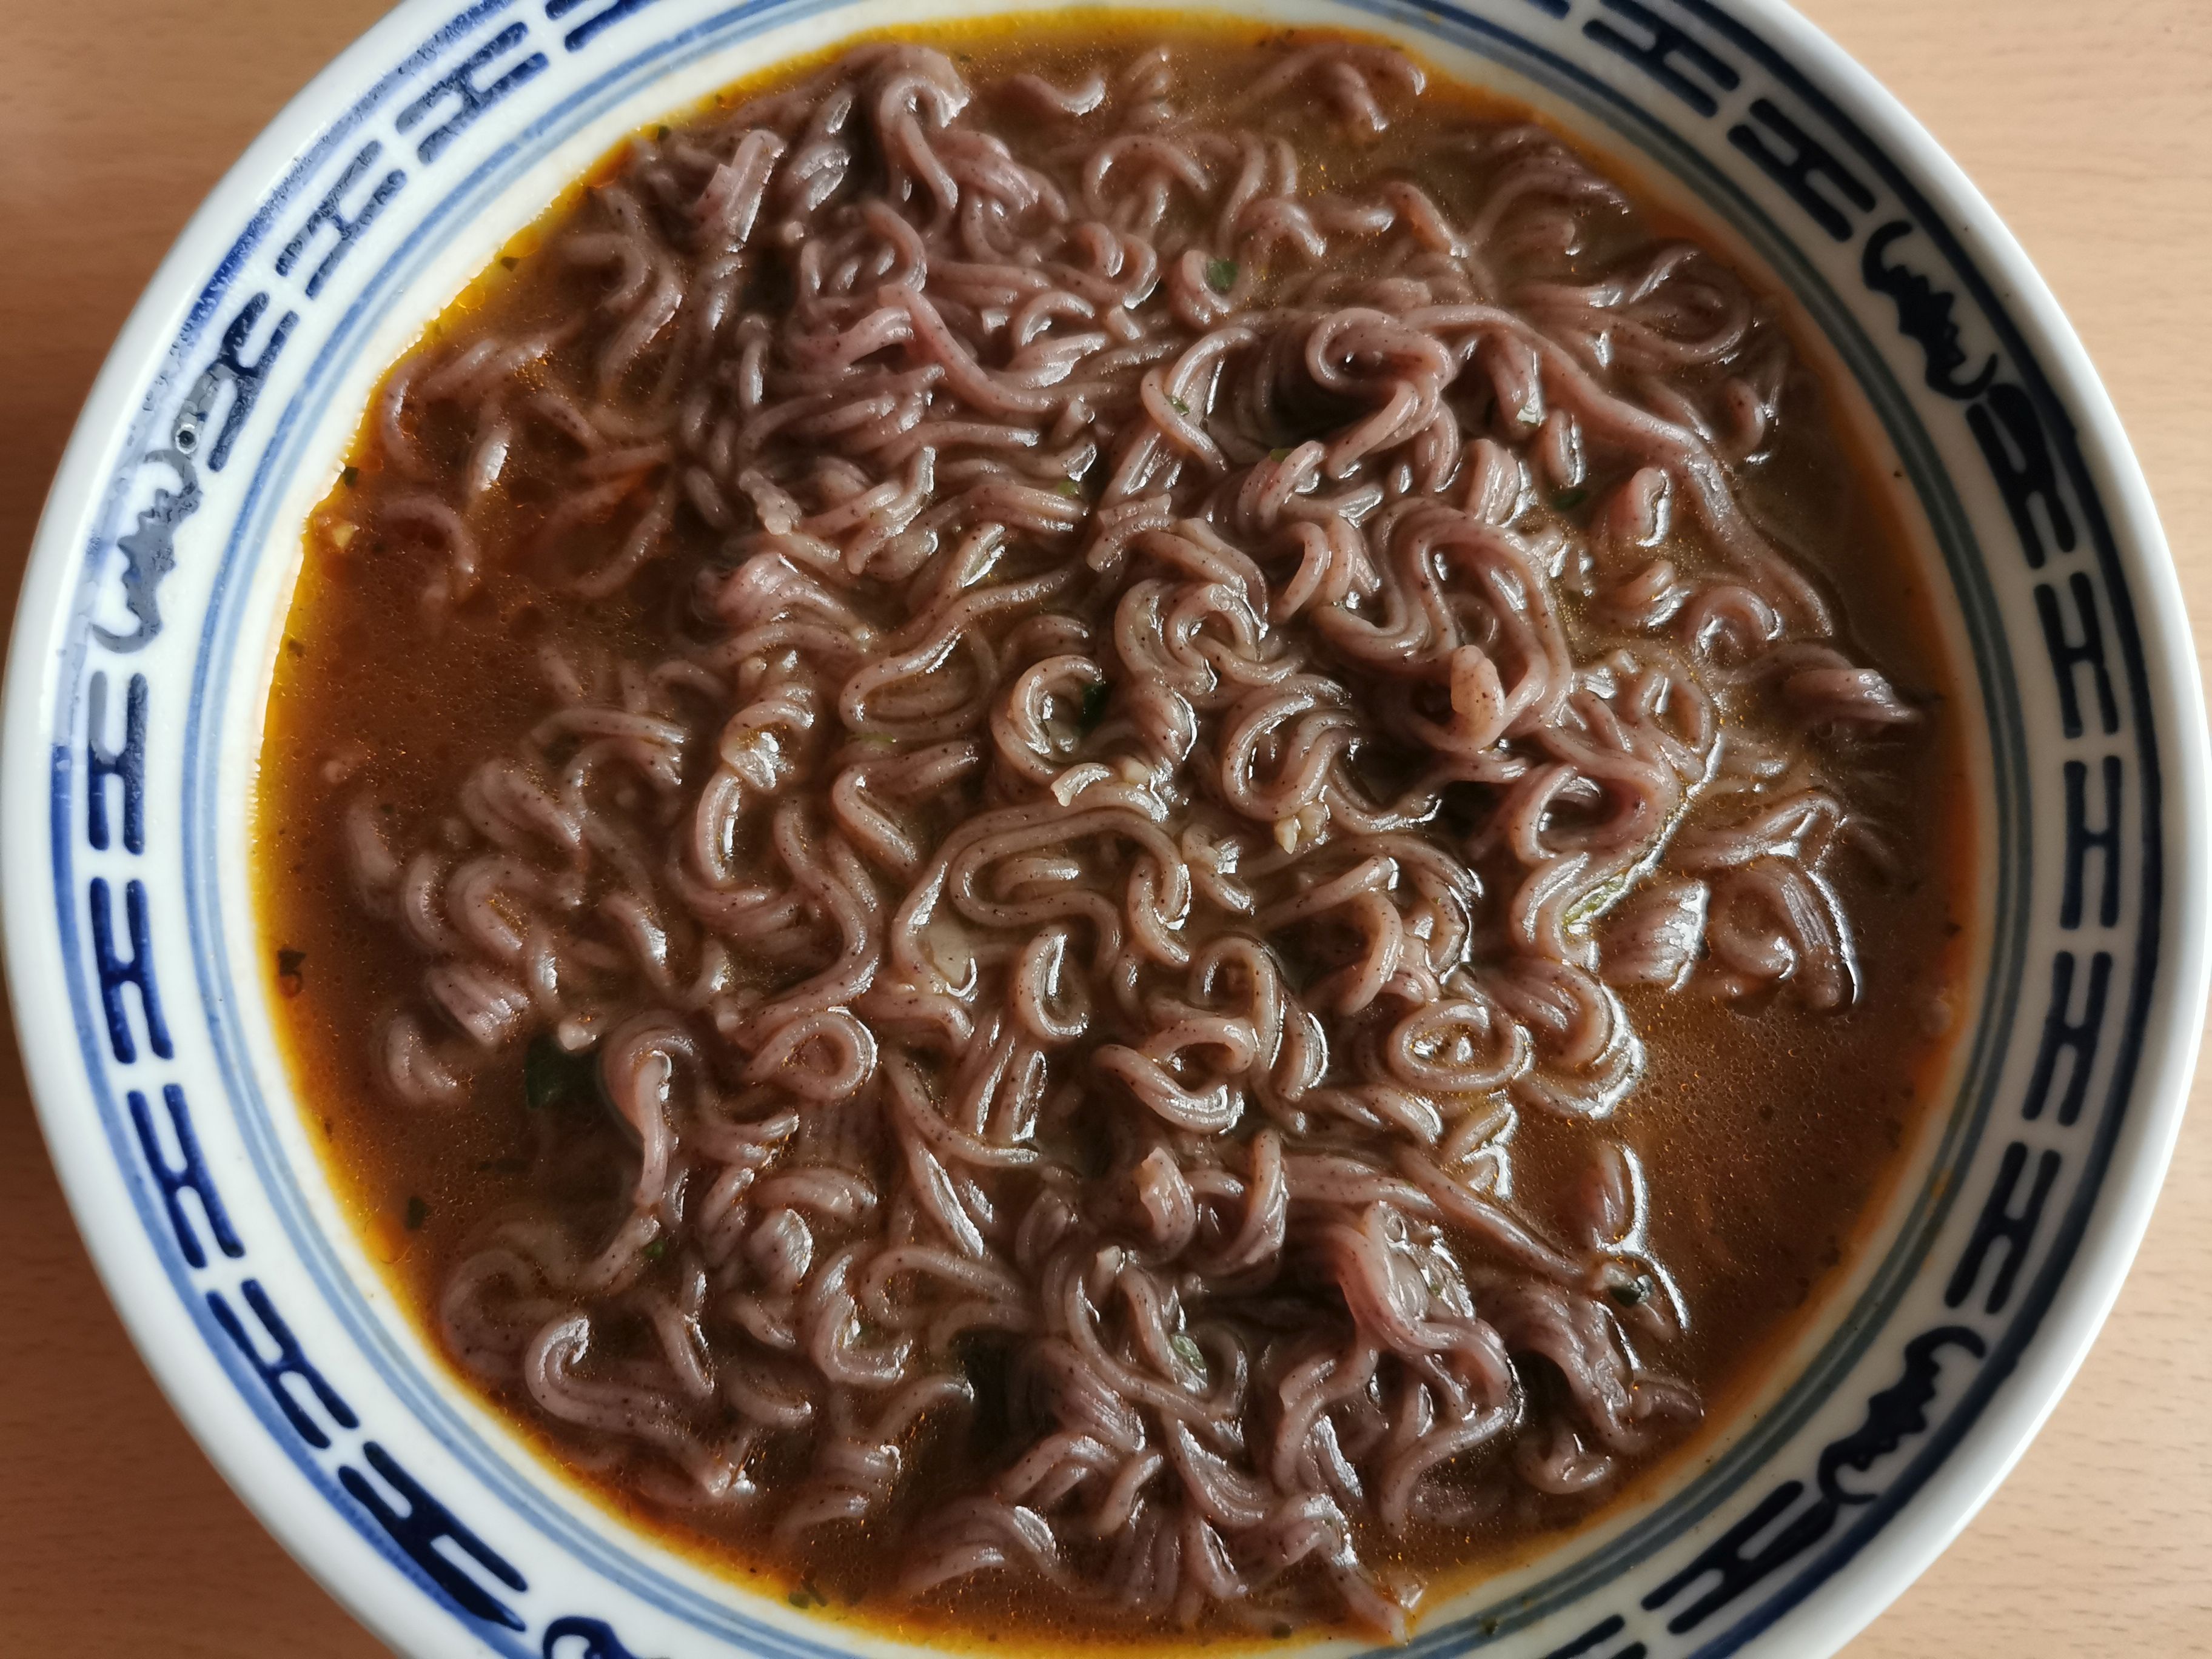 #2106: Koka "Purple Wheat Noodles Homestyle Braised Duck Flavor"